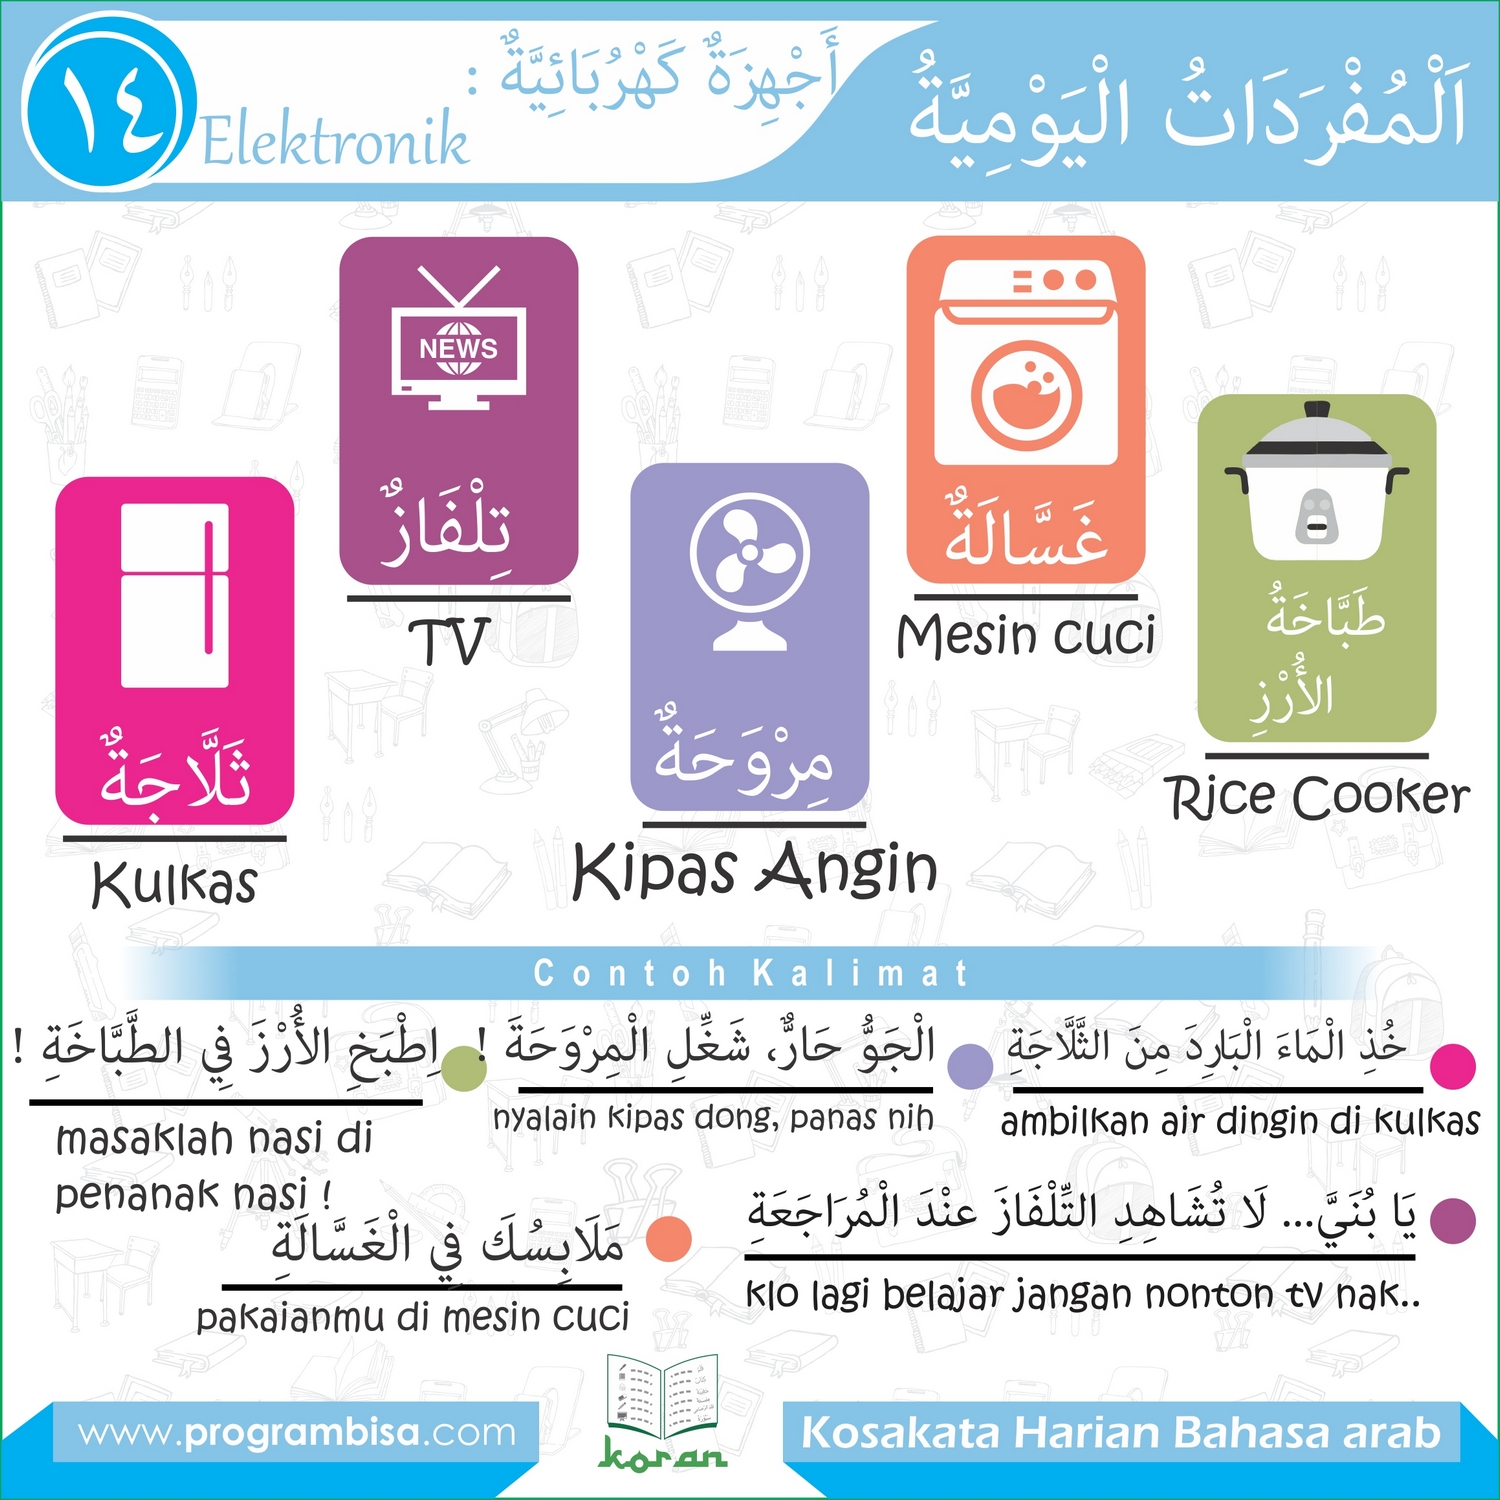 Kosakata Harian Bahasa Arab 014 elektronik Tutorial